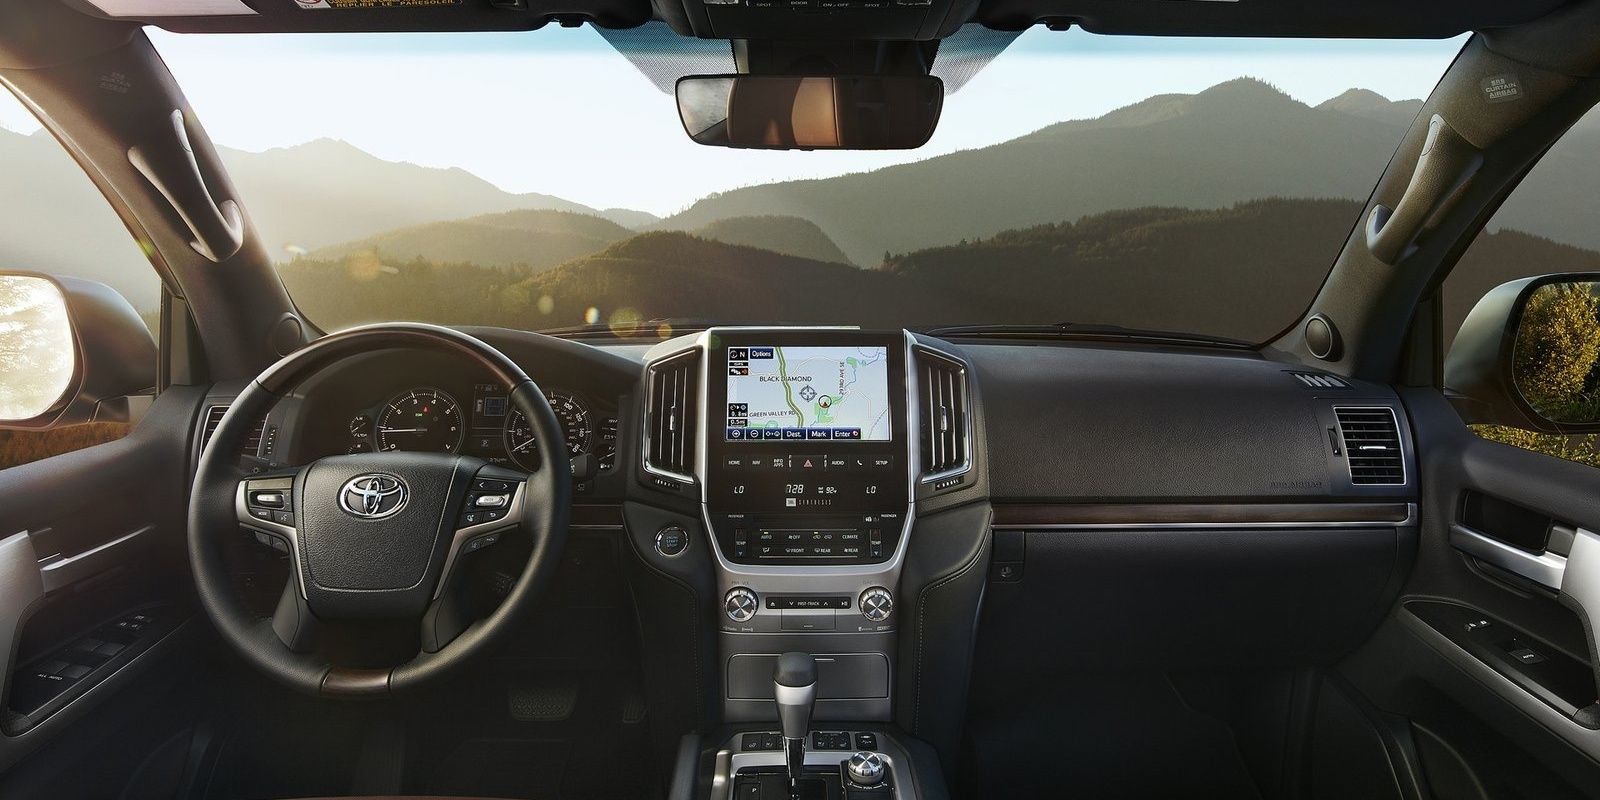 Toyota Land Cruiser interior and dash